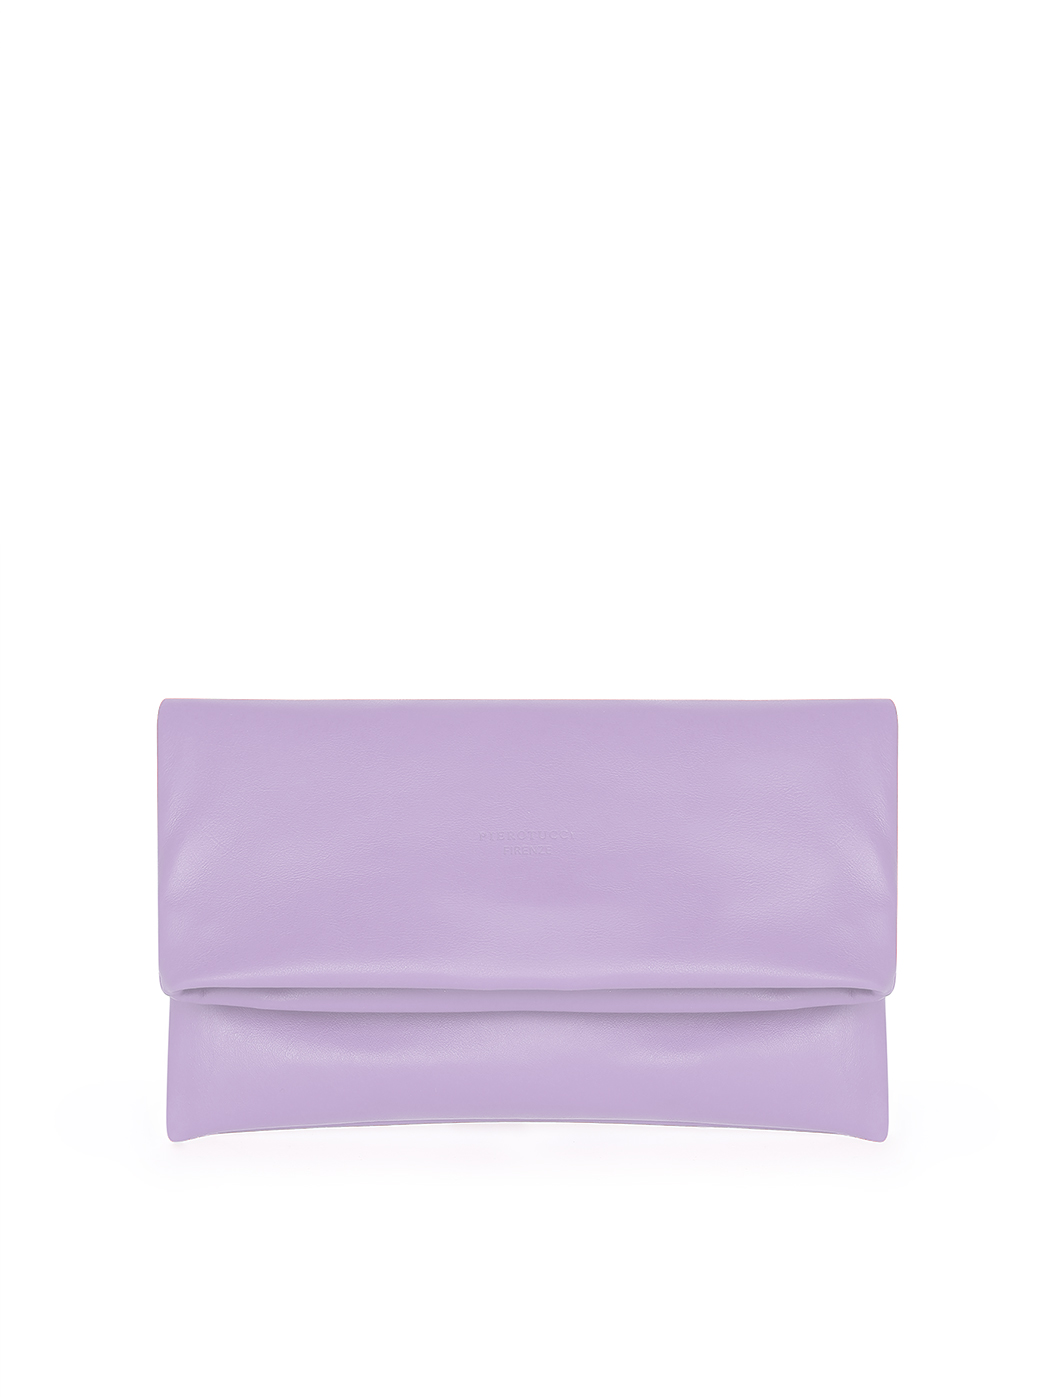 Fuchsia Pink Satin 5.5 Inch Sew in Clasp Purse Frame Clutch Bag - Etsy